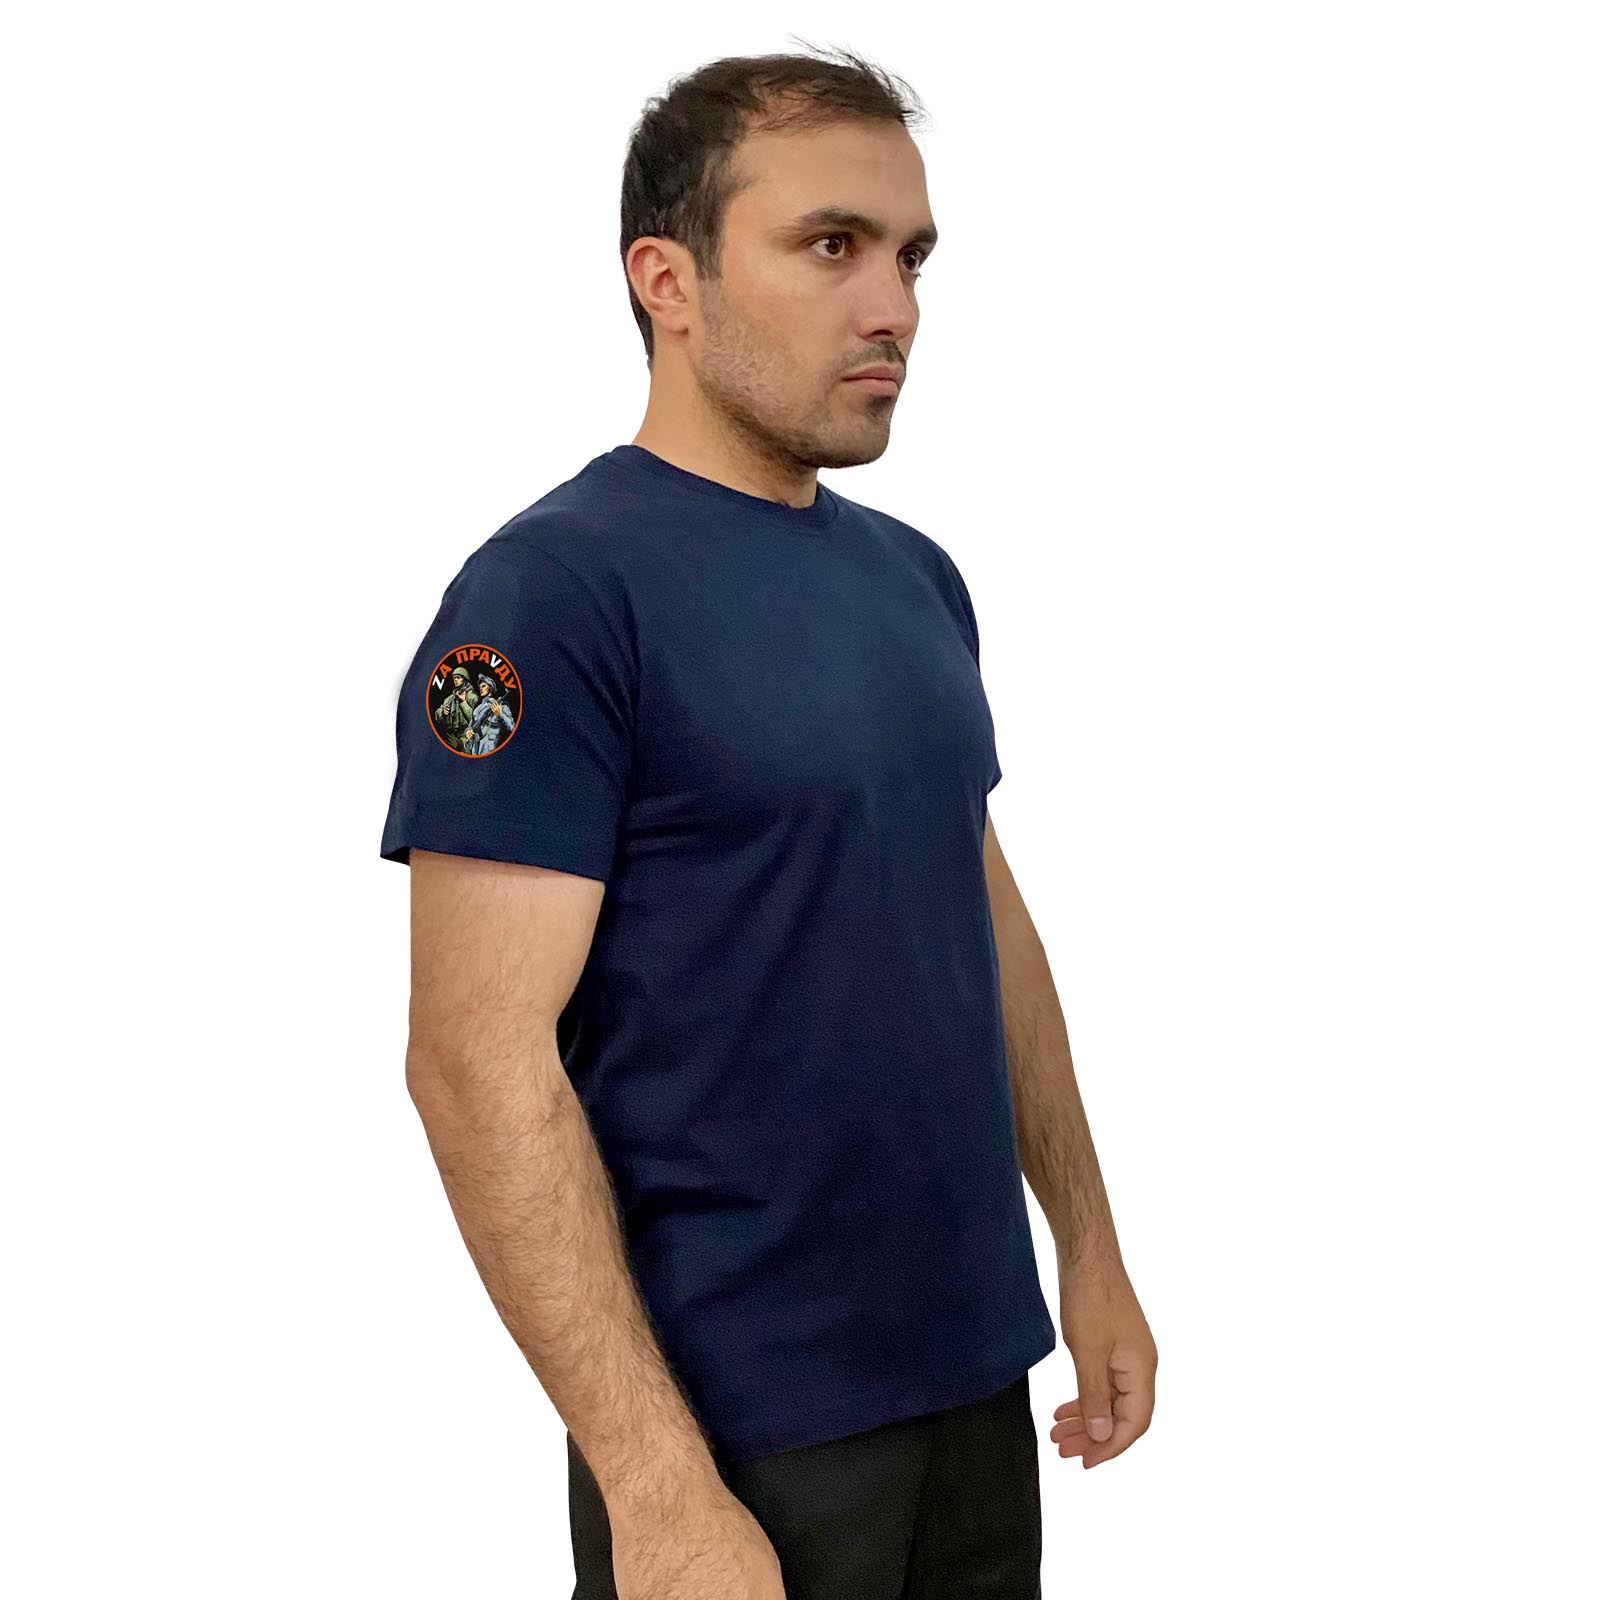 Тёмно-синяя футболка с термотрансфером "Zа праVду" на рукаве